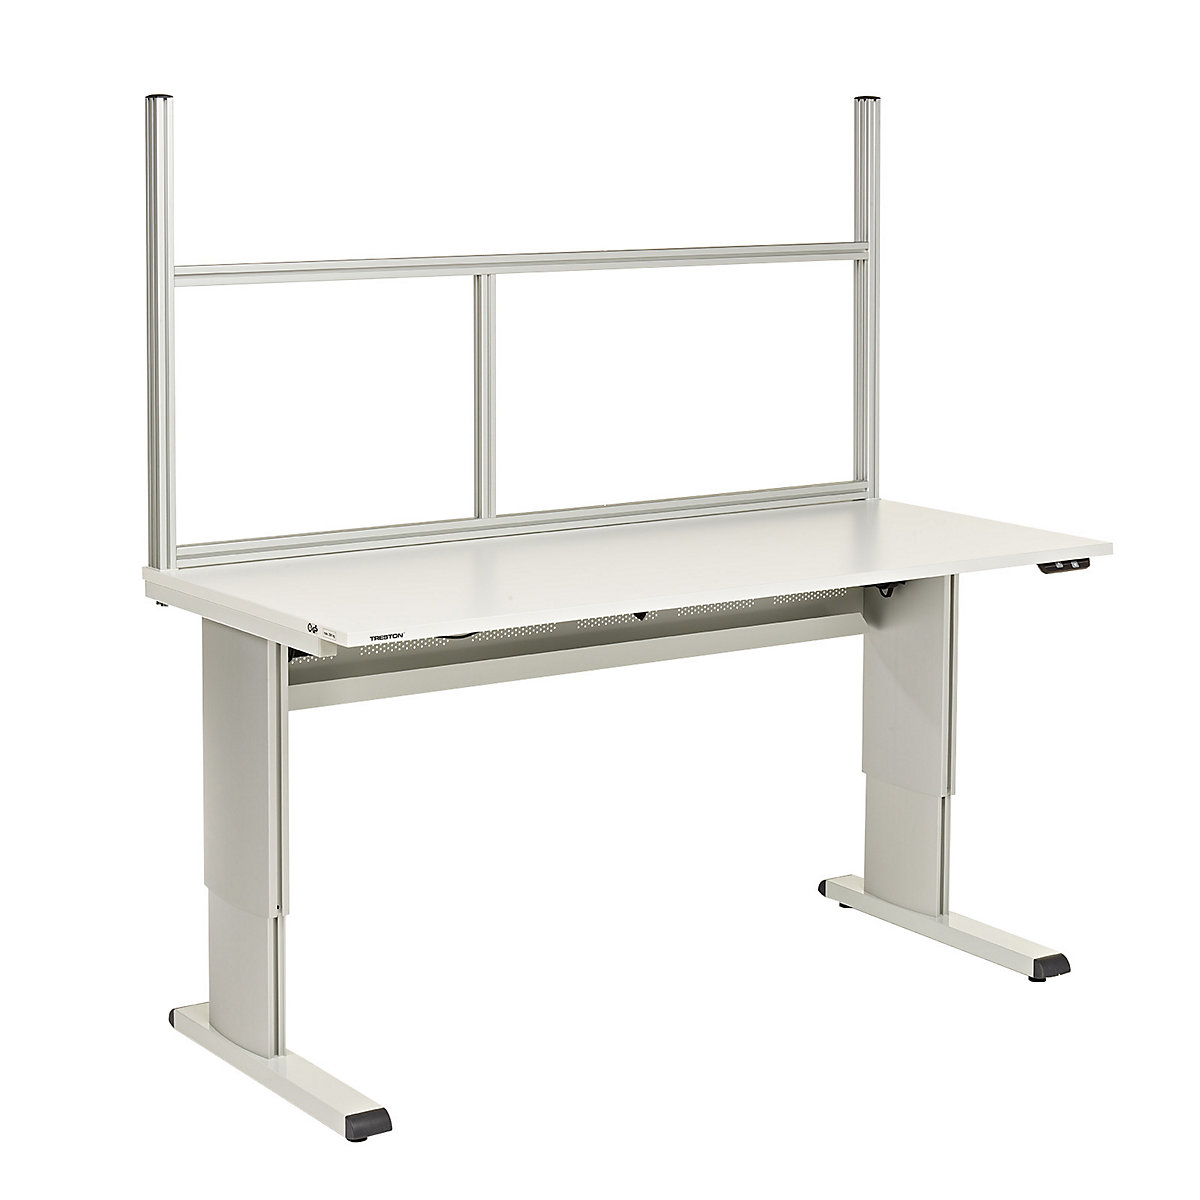 Frame for work table – Treston, light grey, WxD 730 x 540 mm